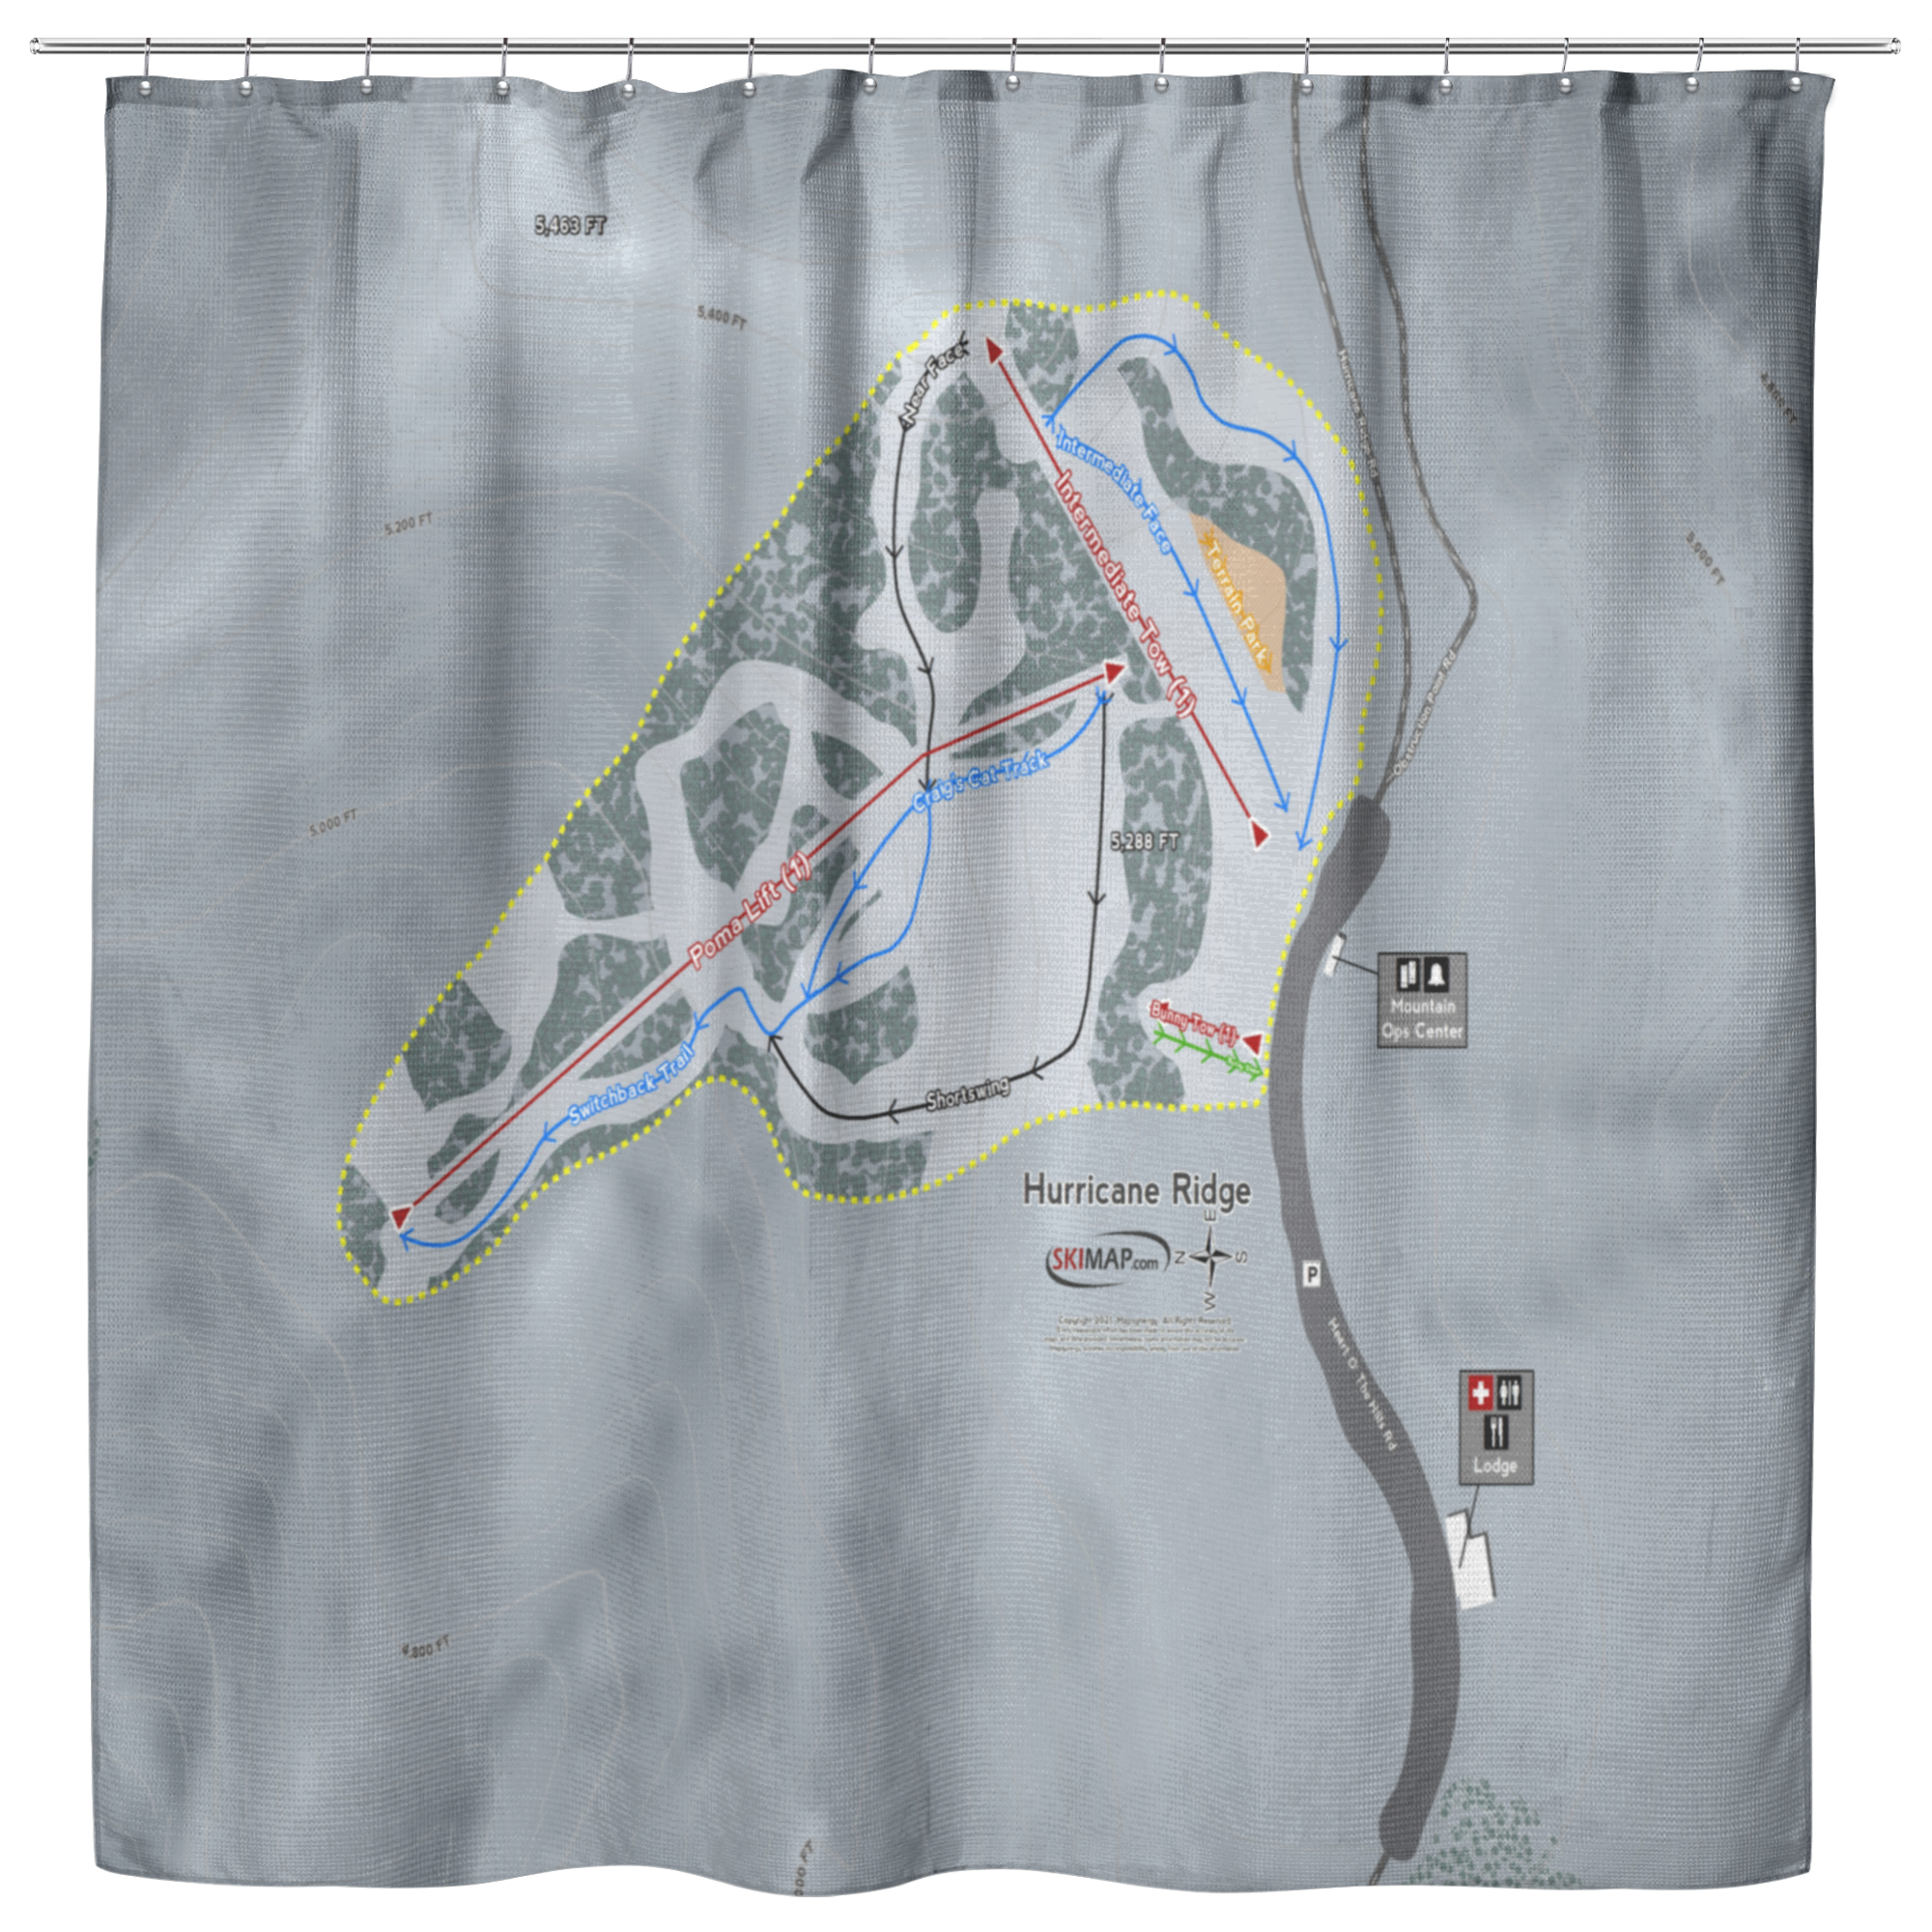 Hurricane Ridge Ski Trail Map Shower Curtain - Powderaddicts